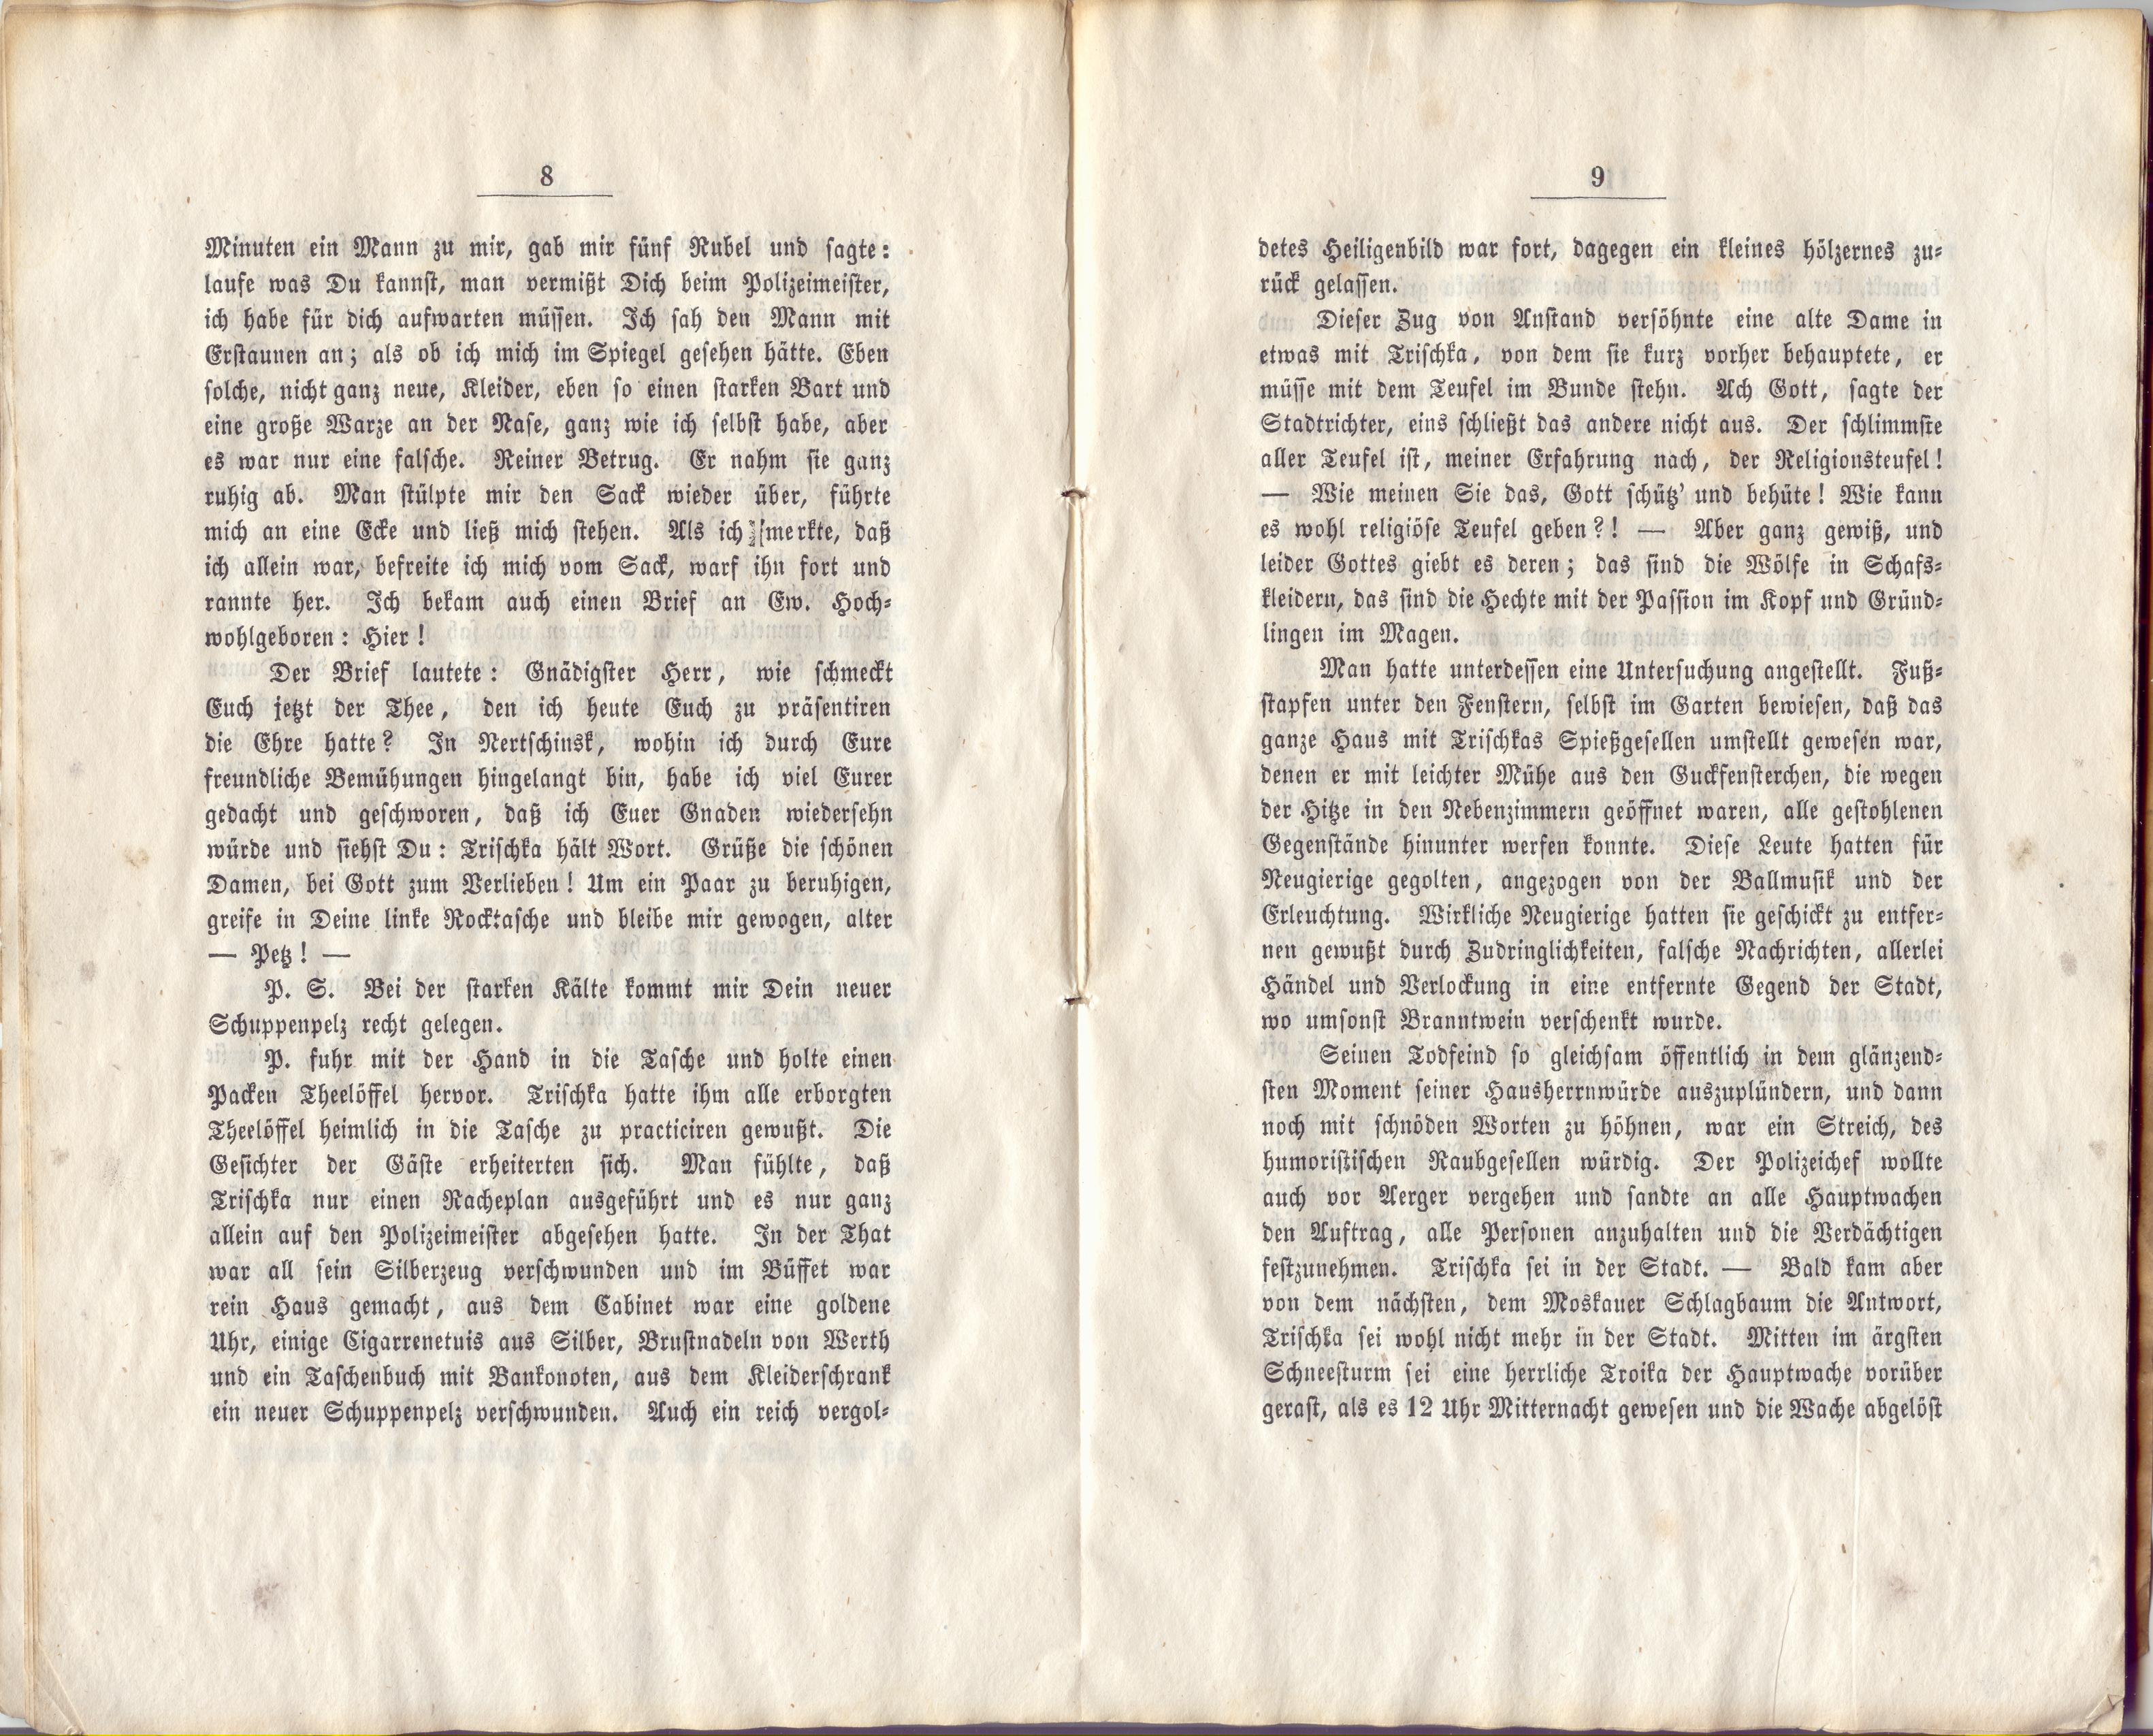 Medicinische Dorfgeschichten (1860) | 22. (8-9) Main body of text